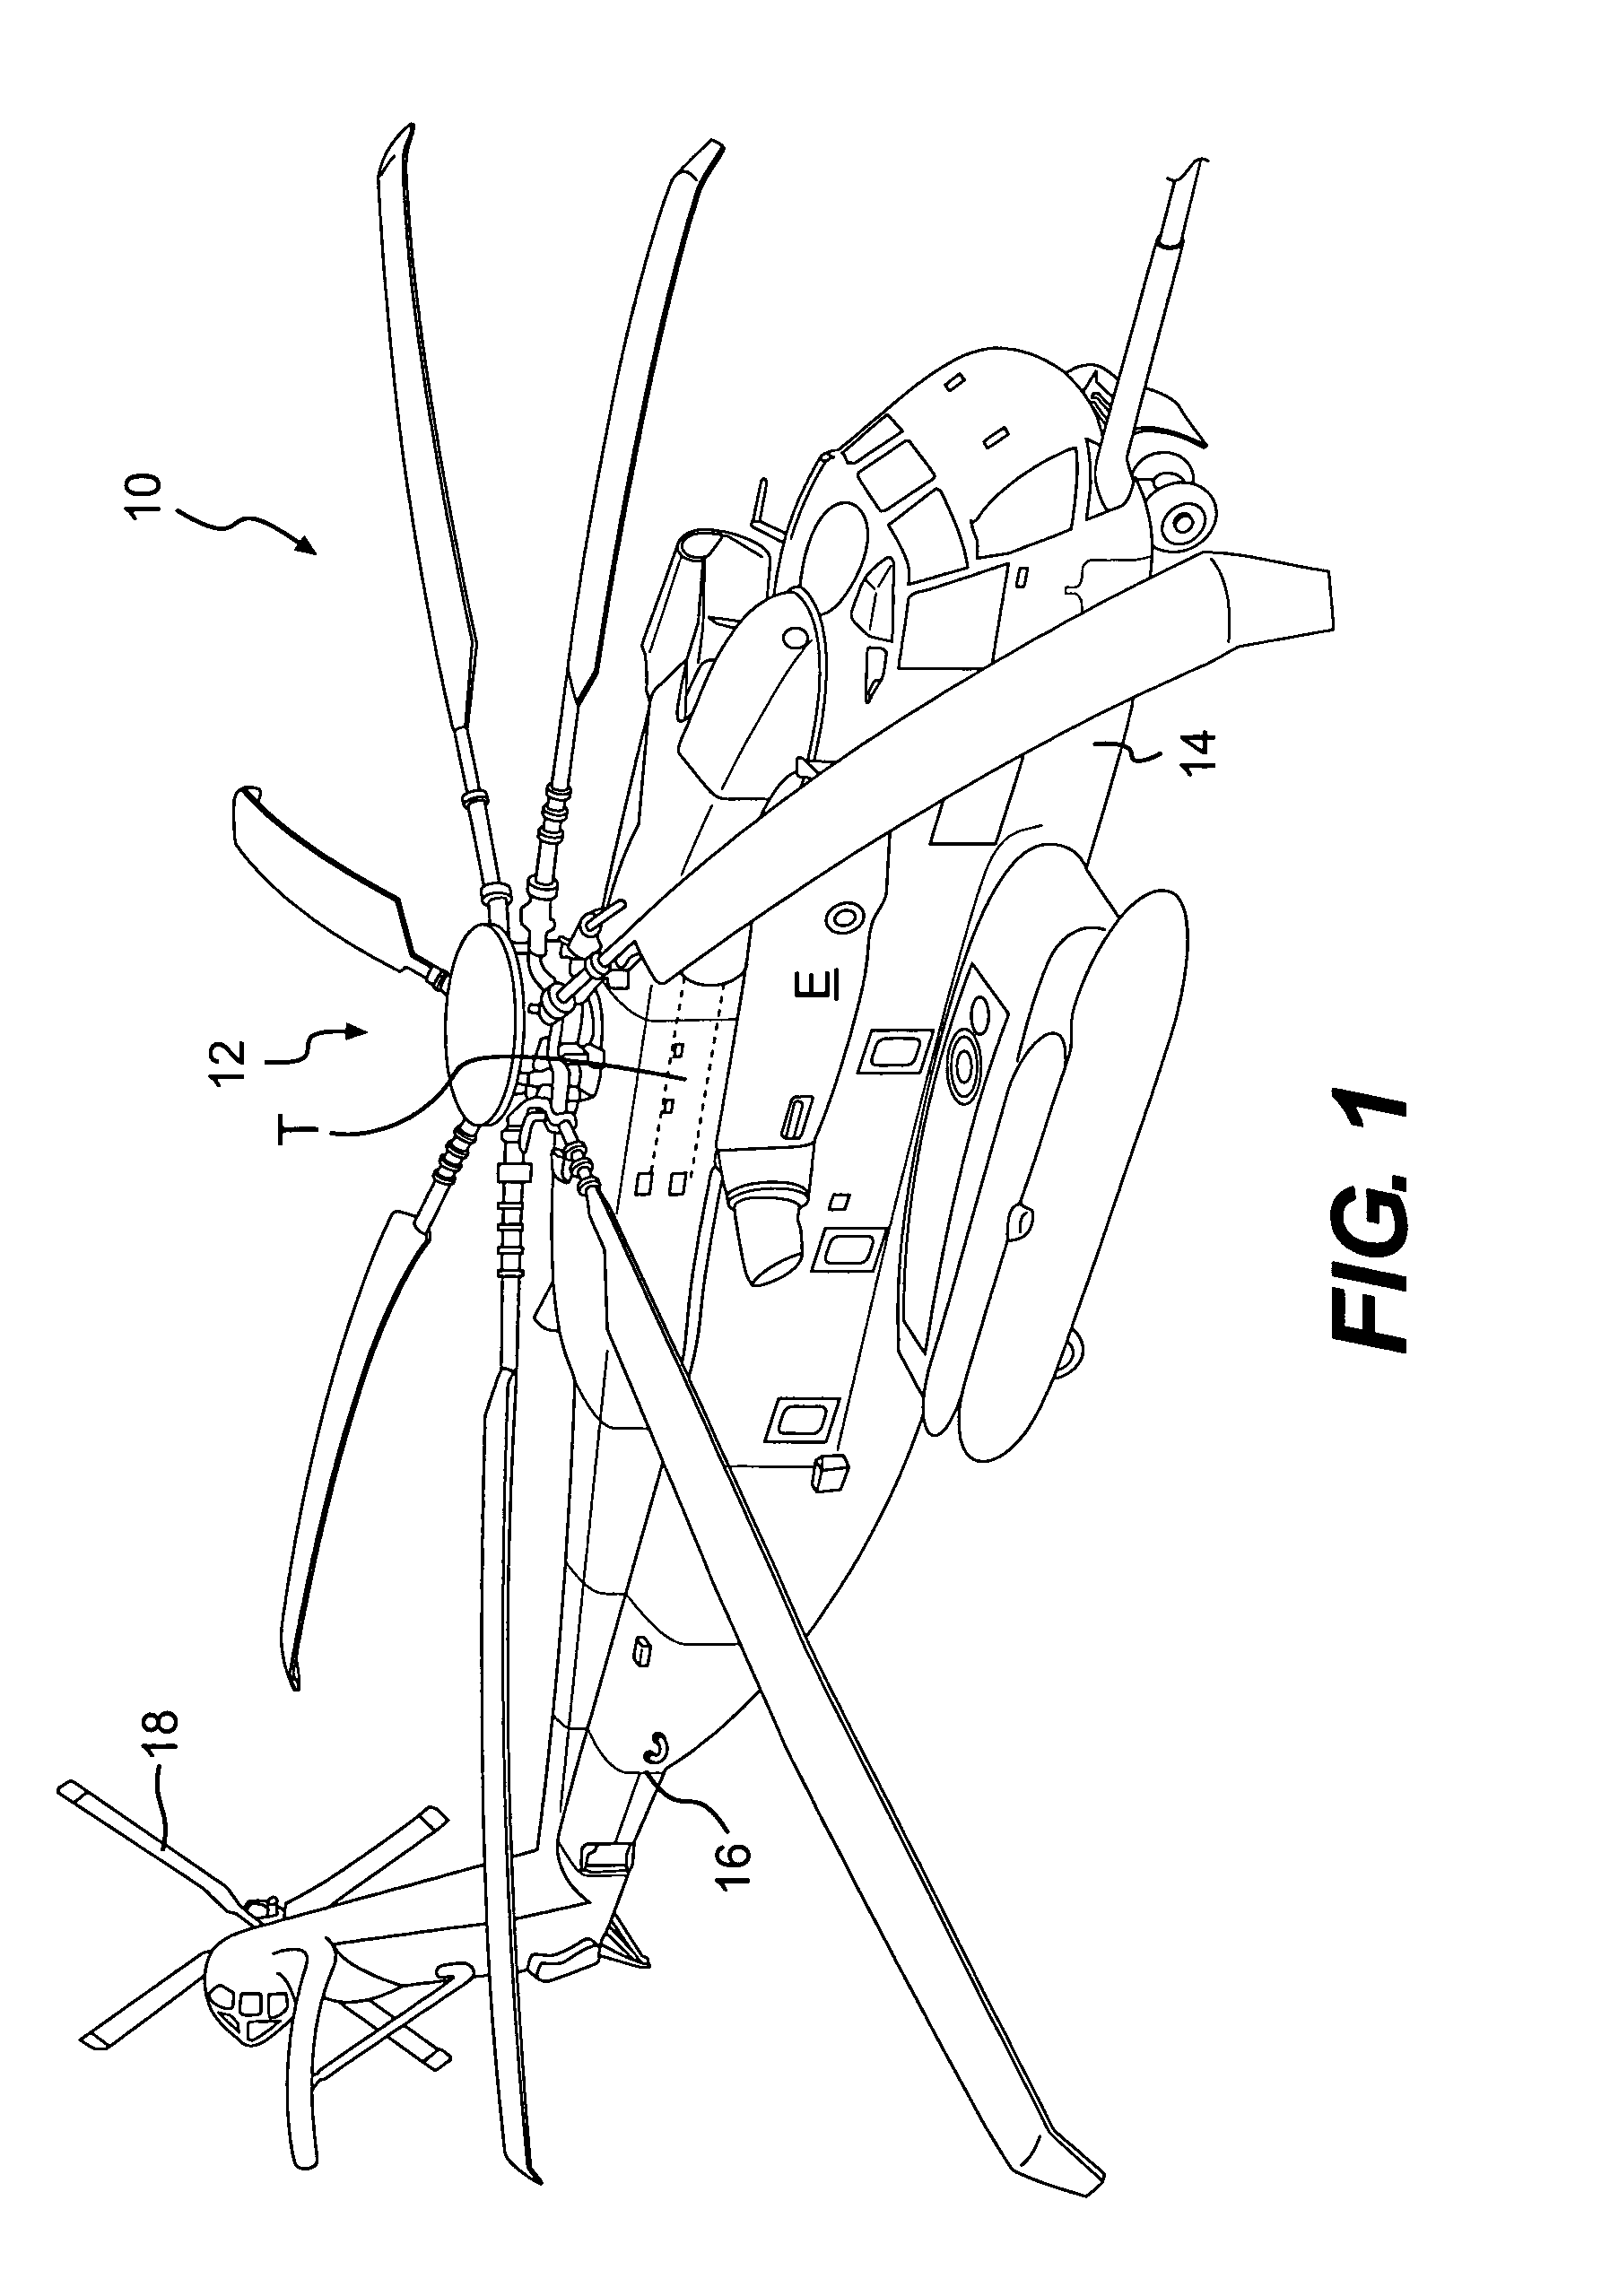 Rotor blade tip planform